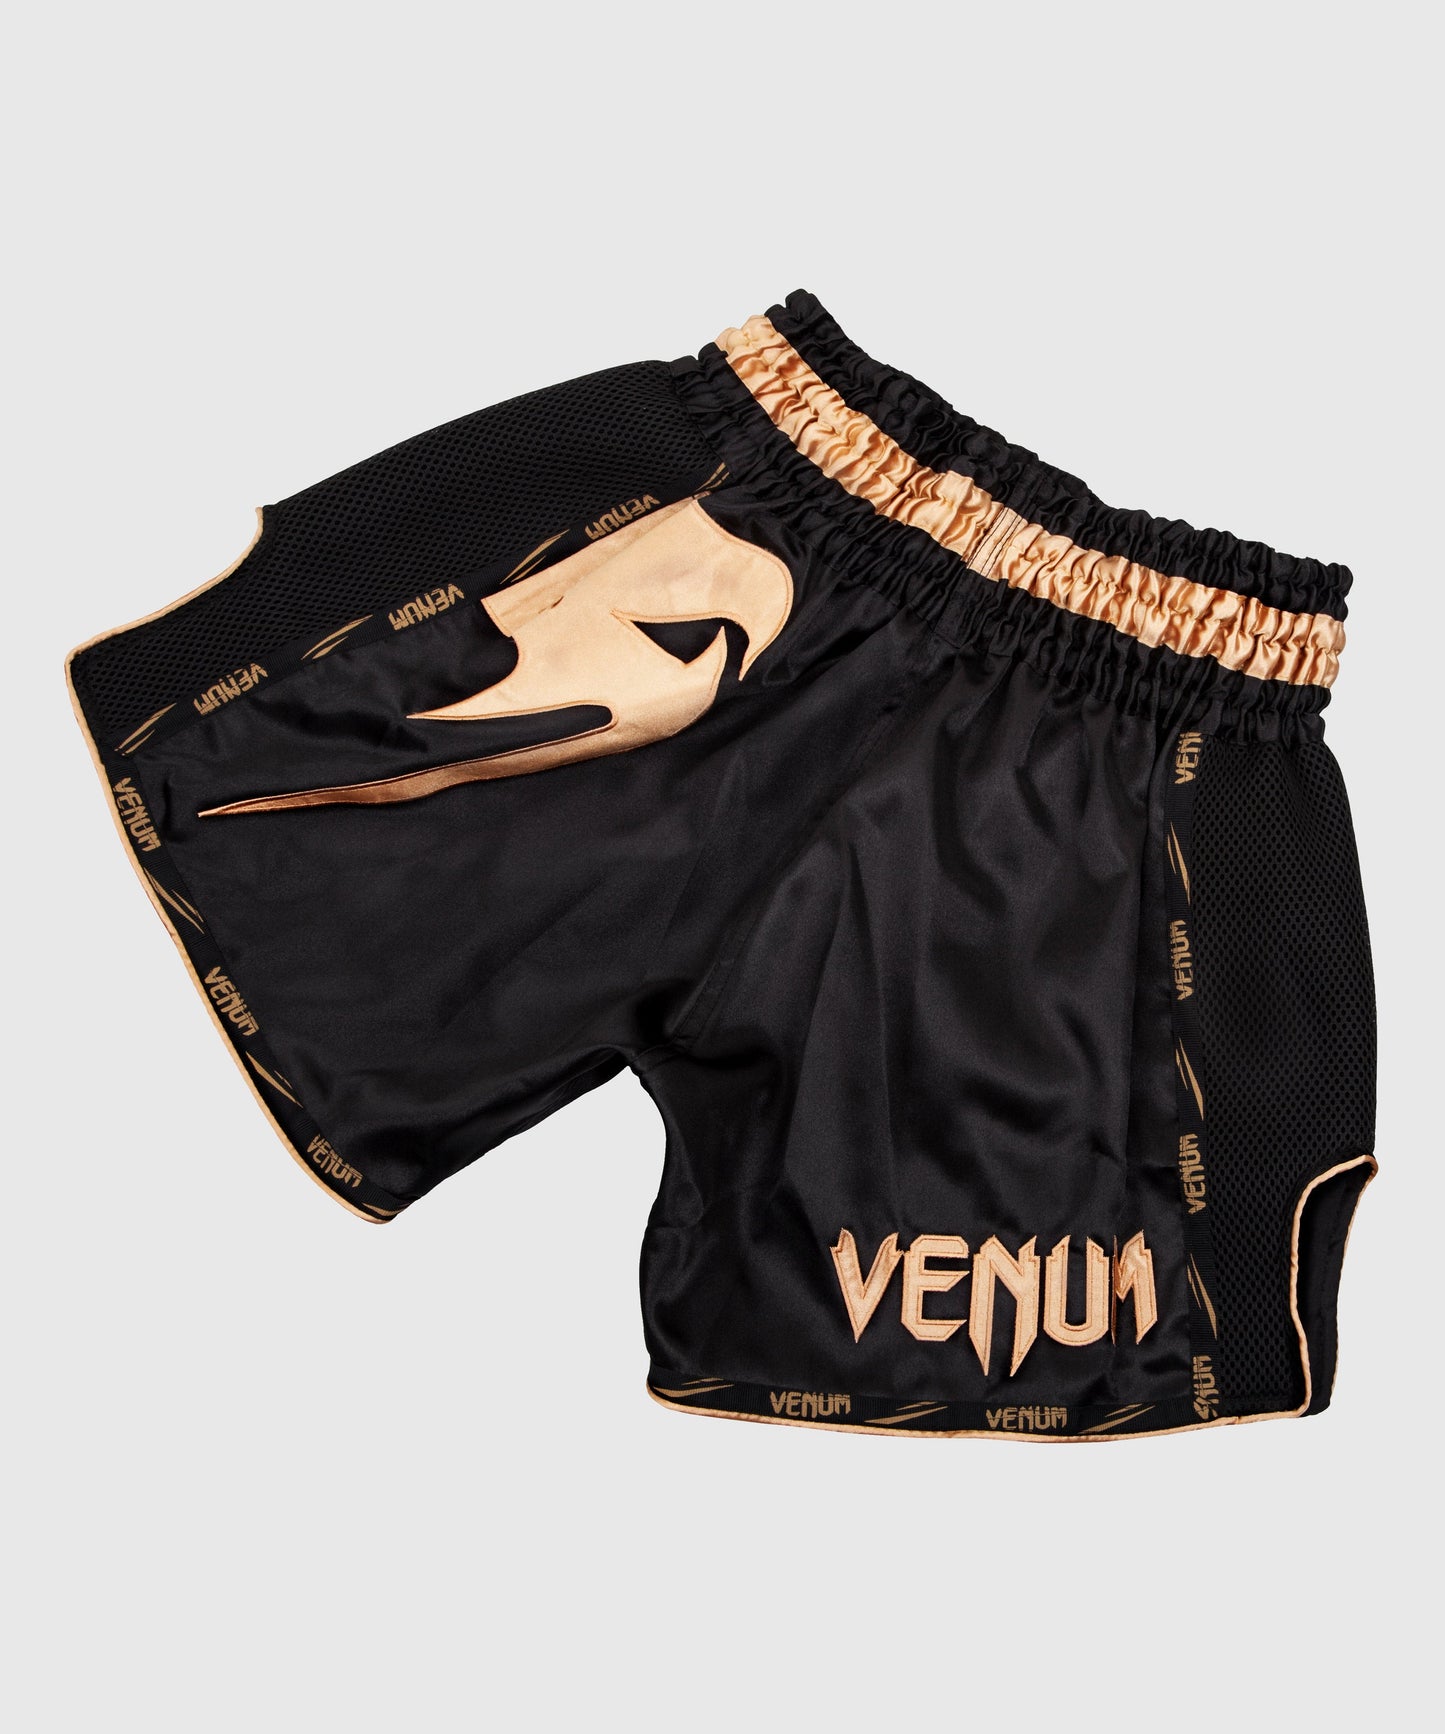 Venum Giant Muay Thai Shorts - Black/Gold